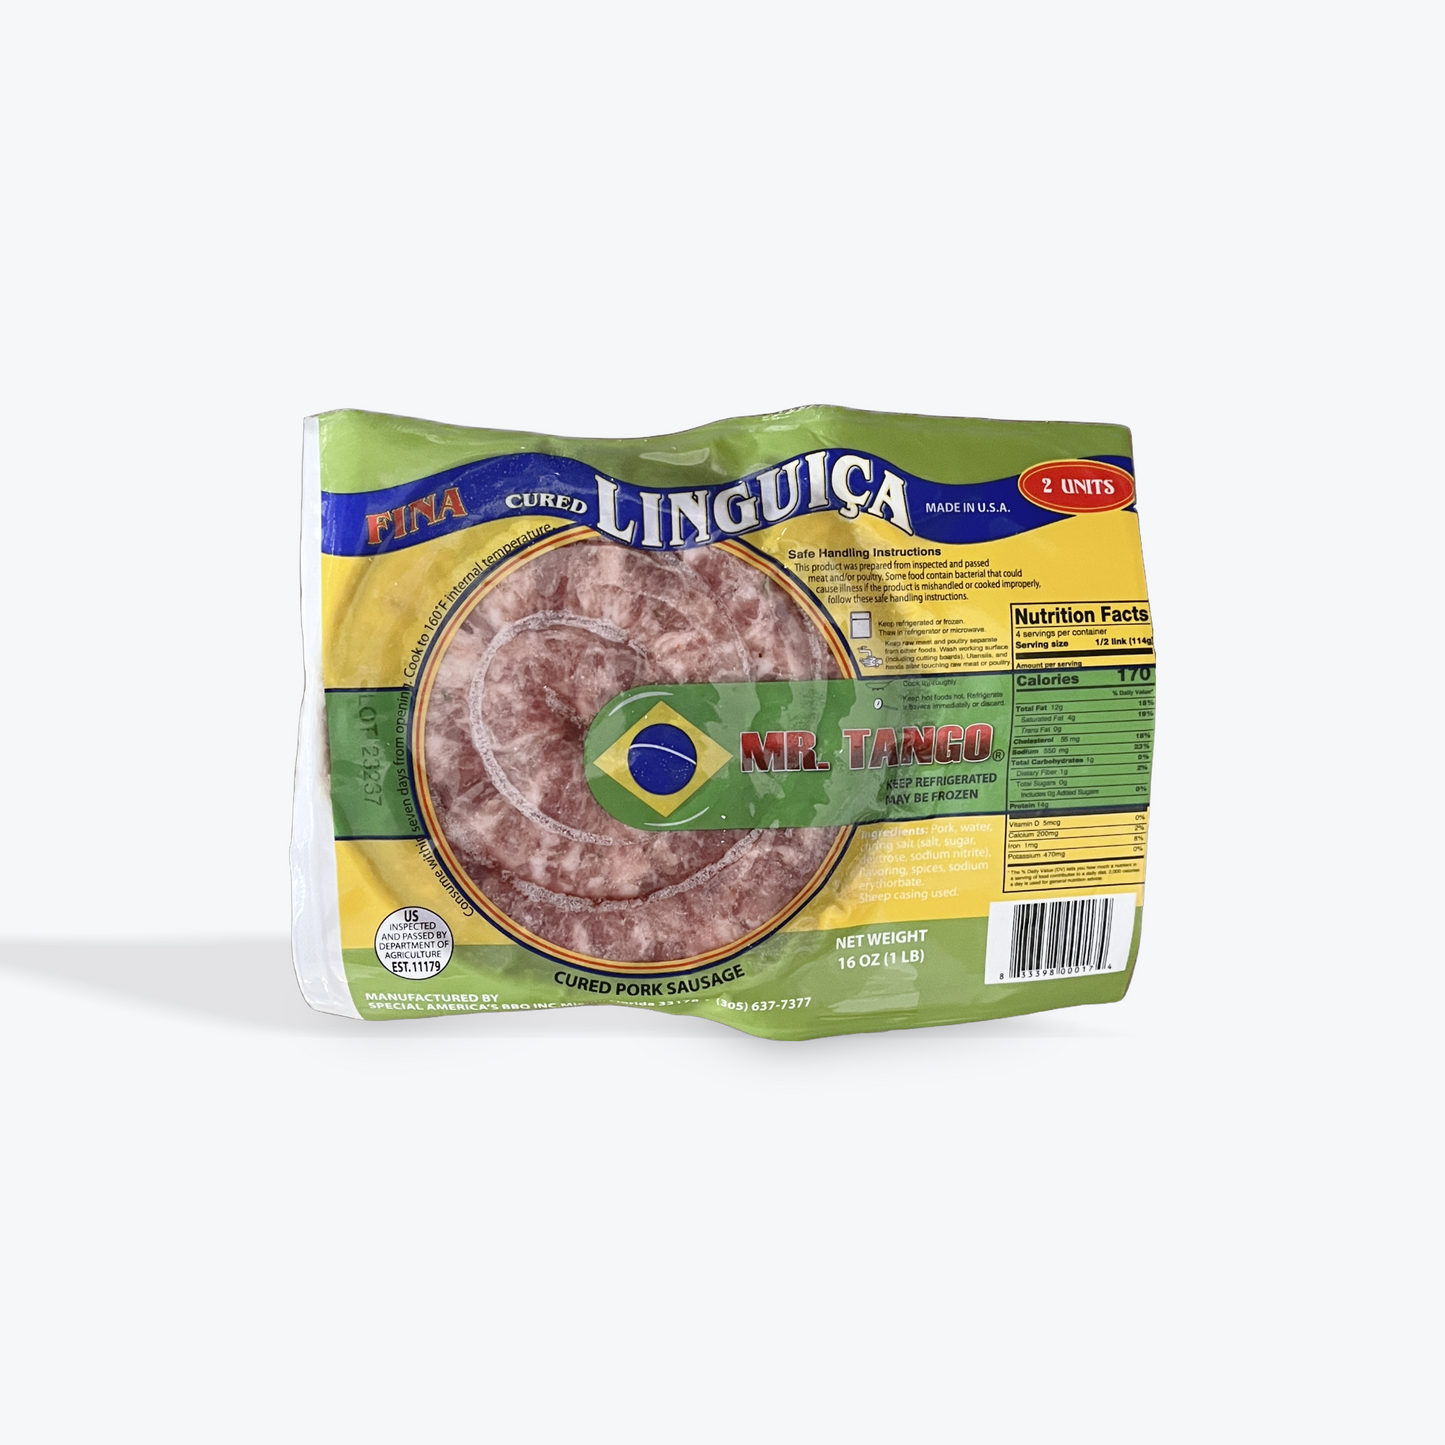 Mr Tango - Linguica Brazilian Sausage, 16 oz, Pack with 2